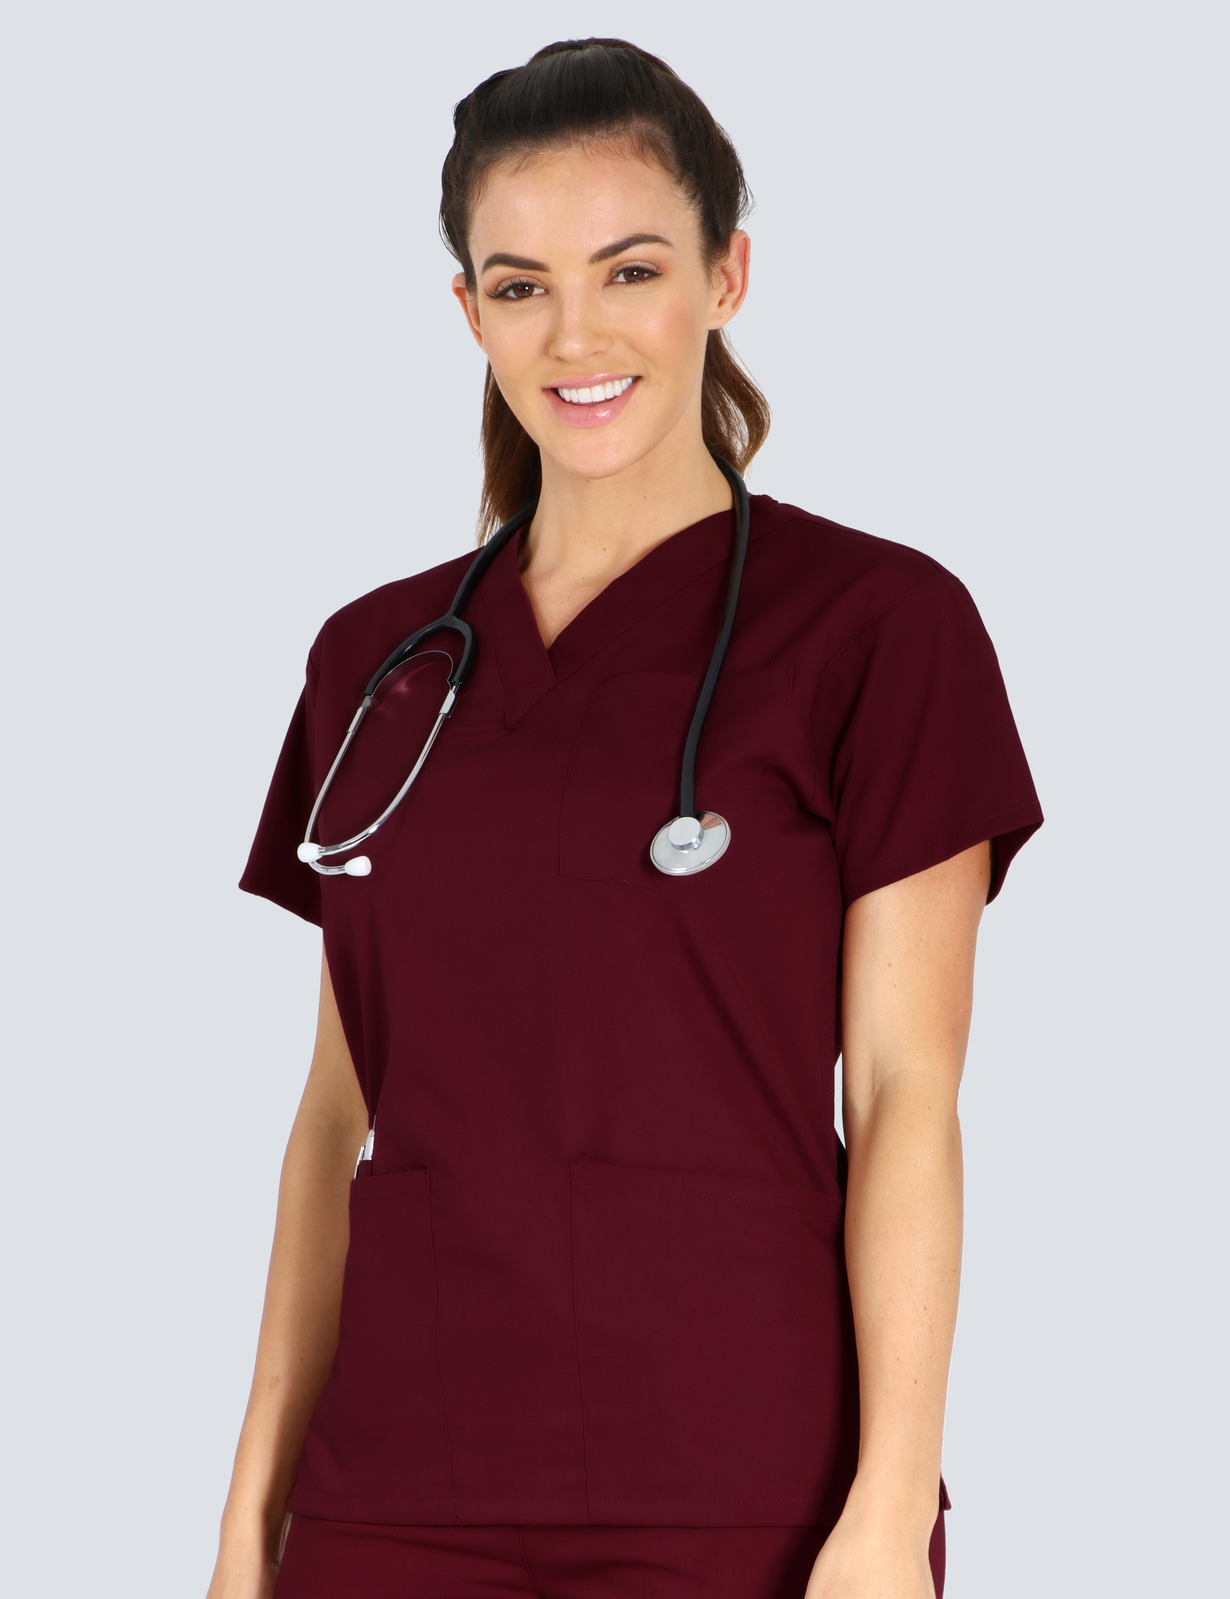 Queensland Children's Hospital Emergency Department Nurse Unit Manager Uniform Top Bundle  (4 Pocket Top  in Burgundy incl Logos)